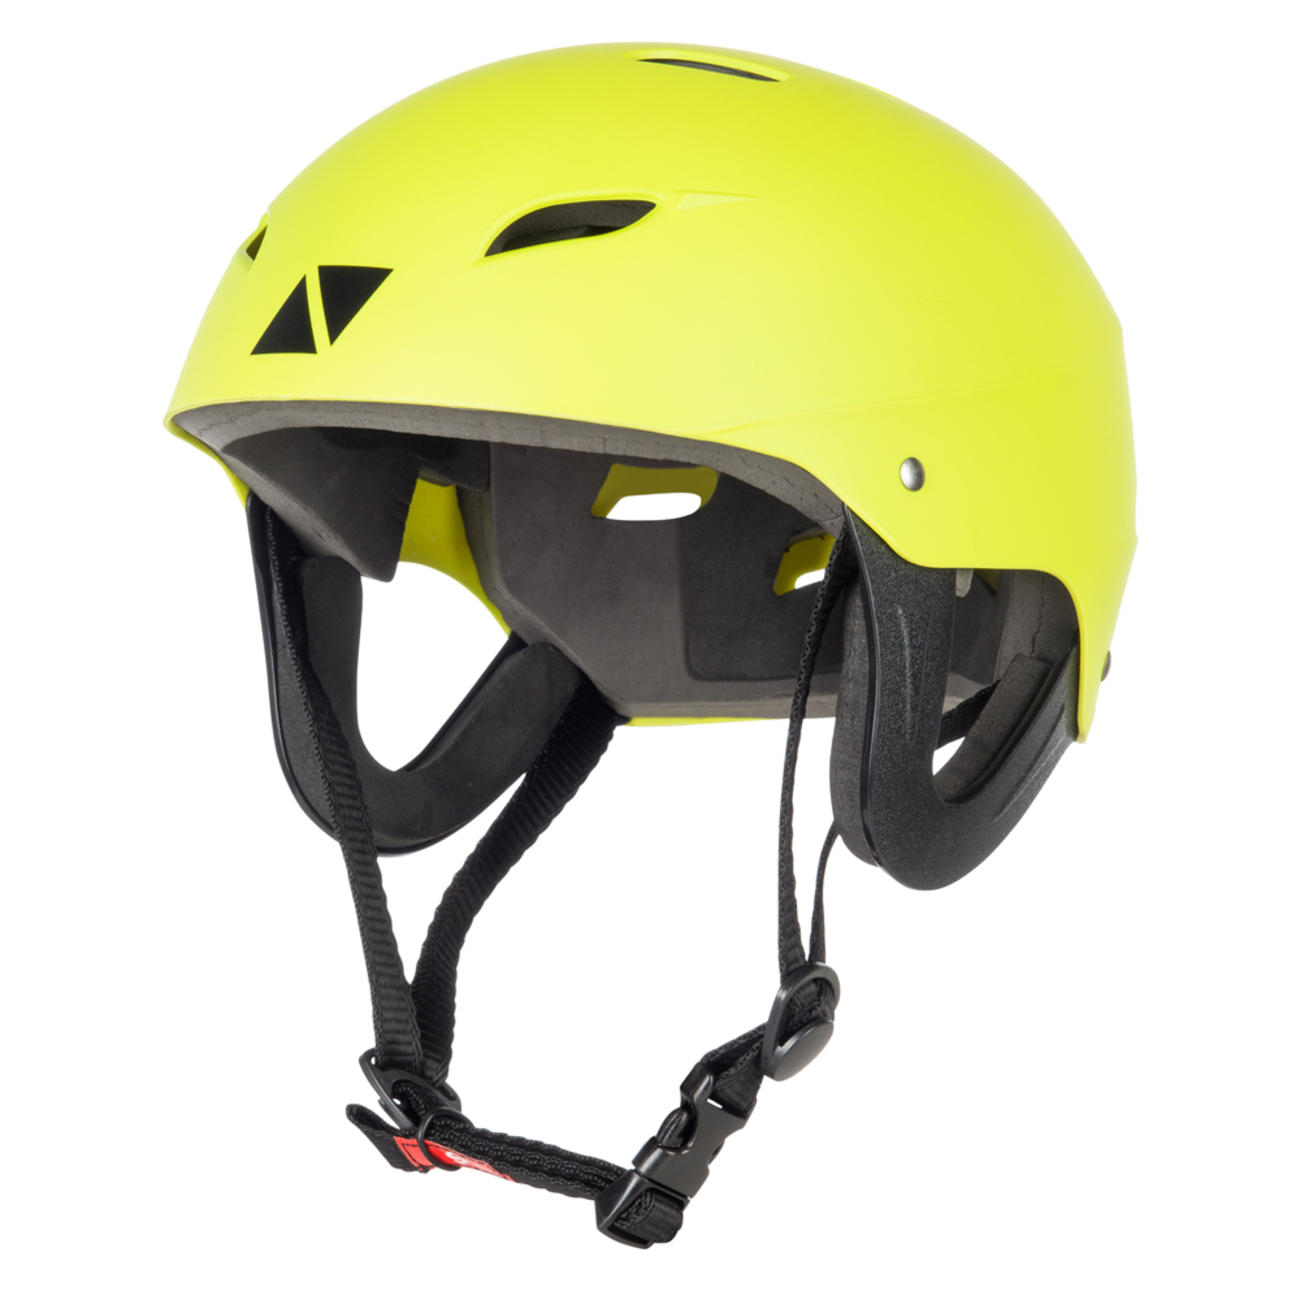 Rental Helmet マリンスポーツ用ヘルメット